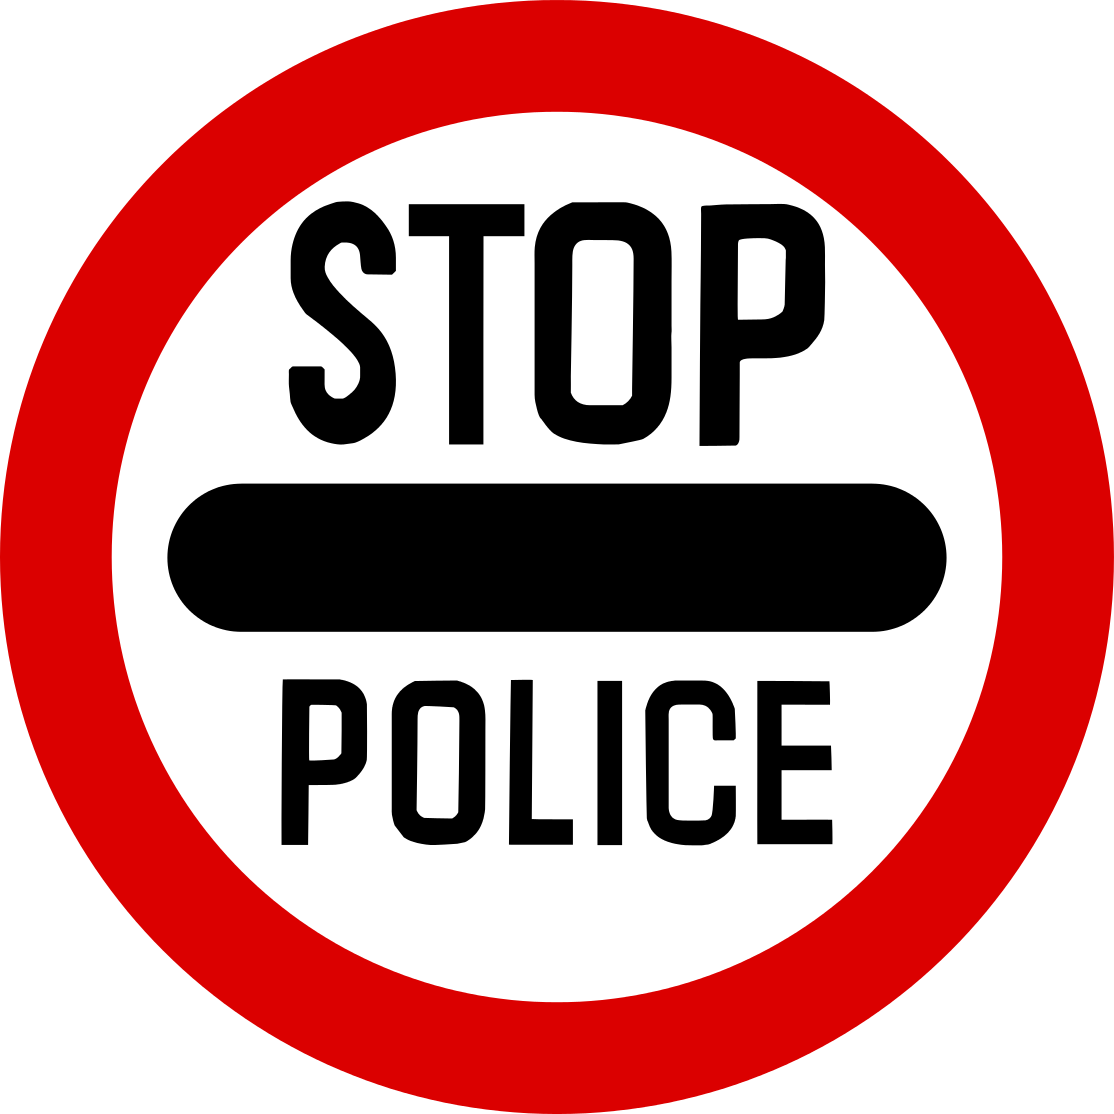 Mandatory stop for police checks